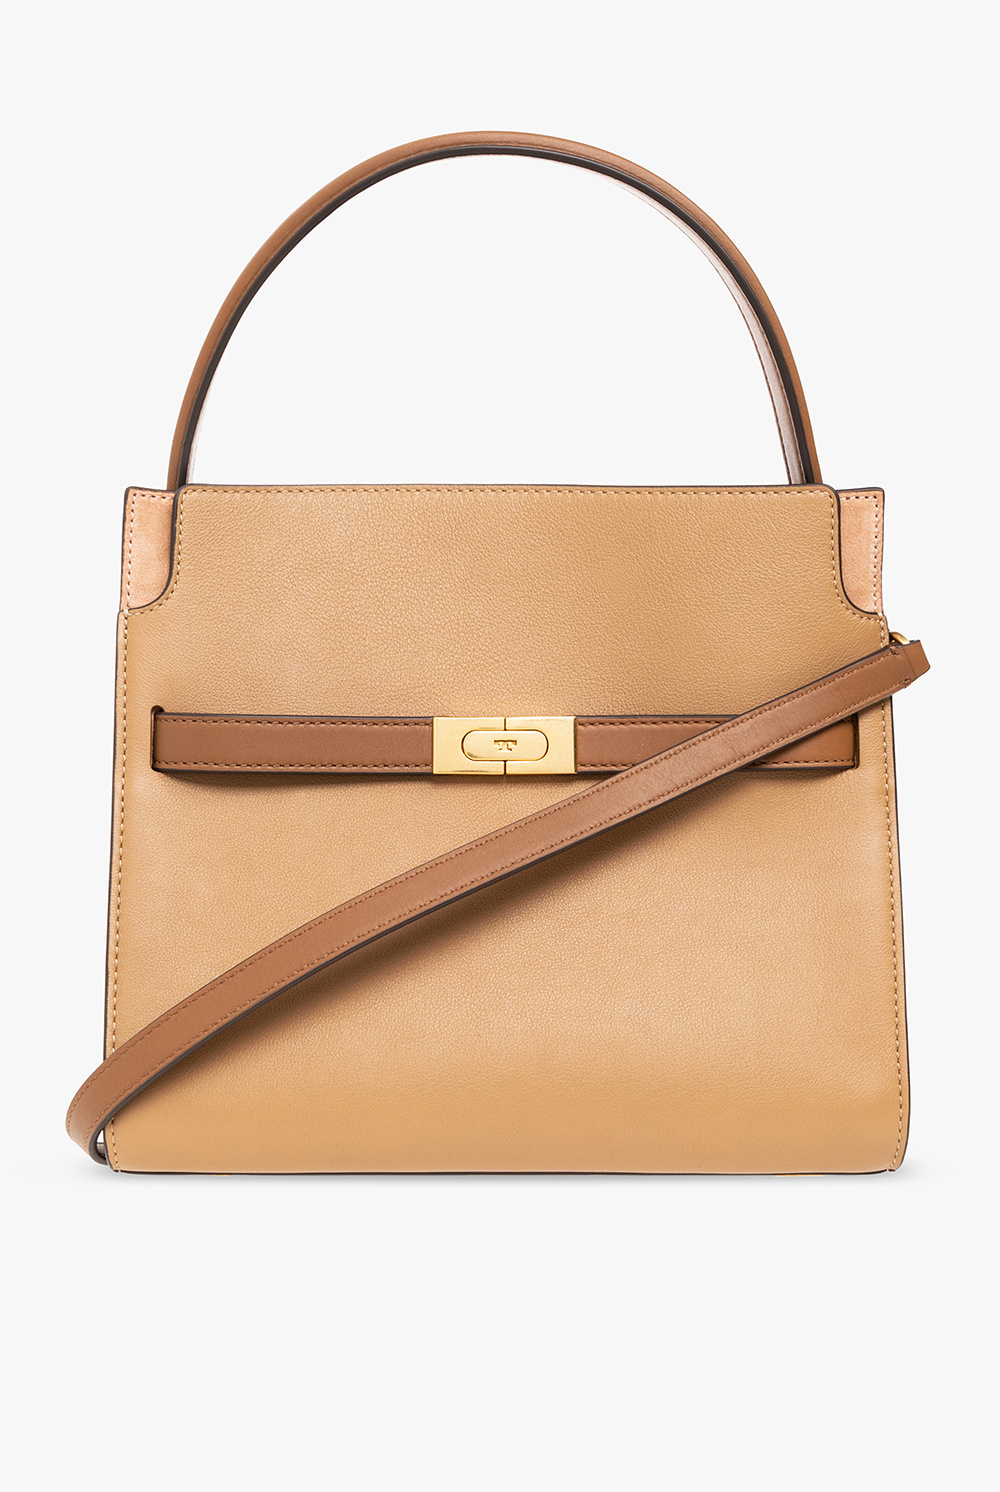 Louis Vuitton S-Lock XL Bag - Vitkac shop online